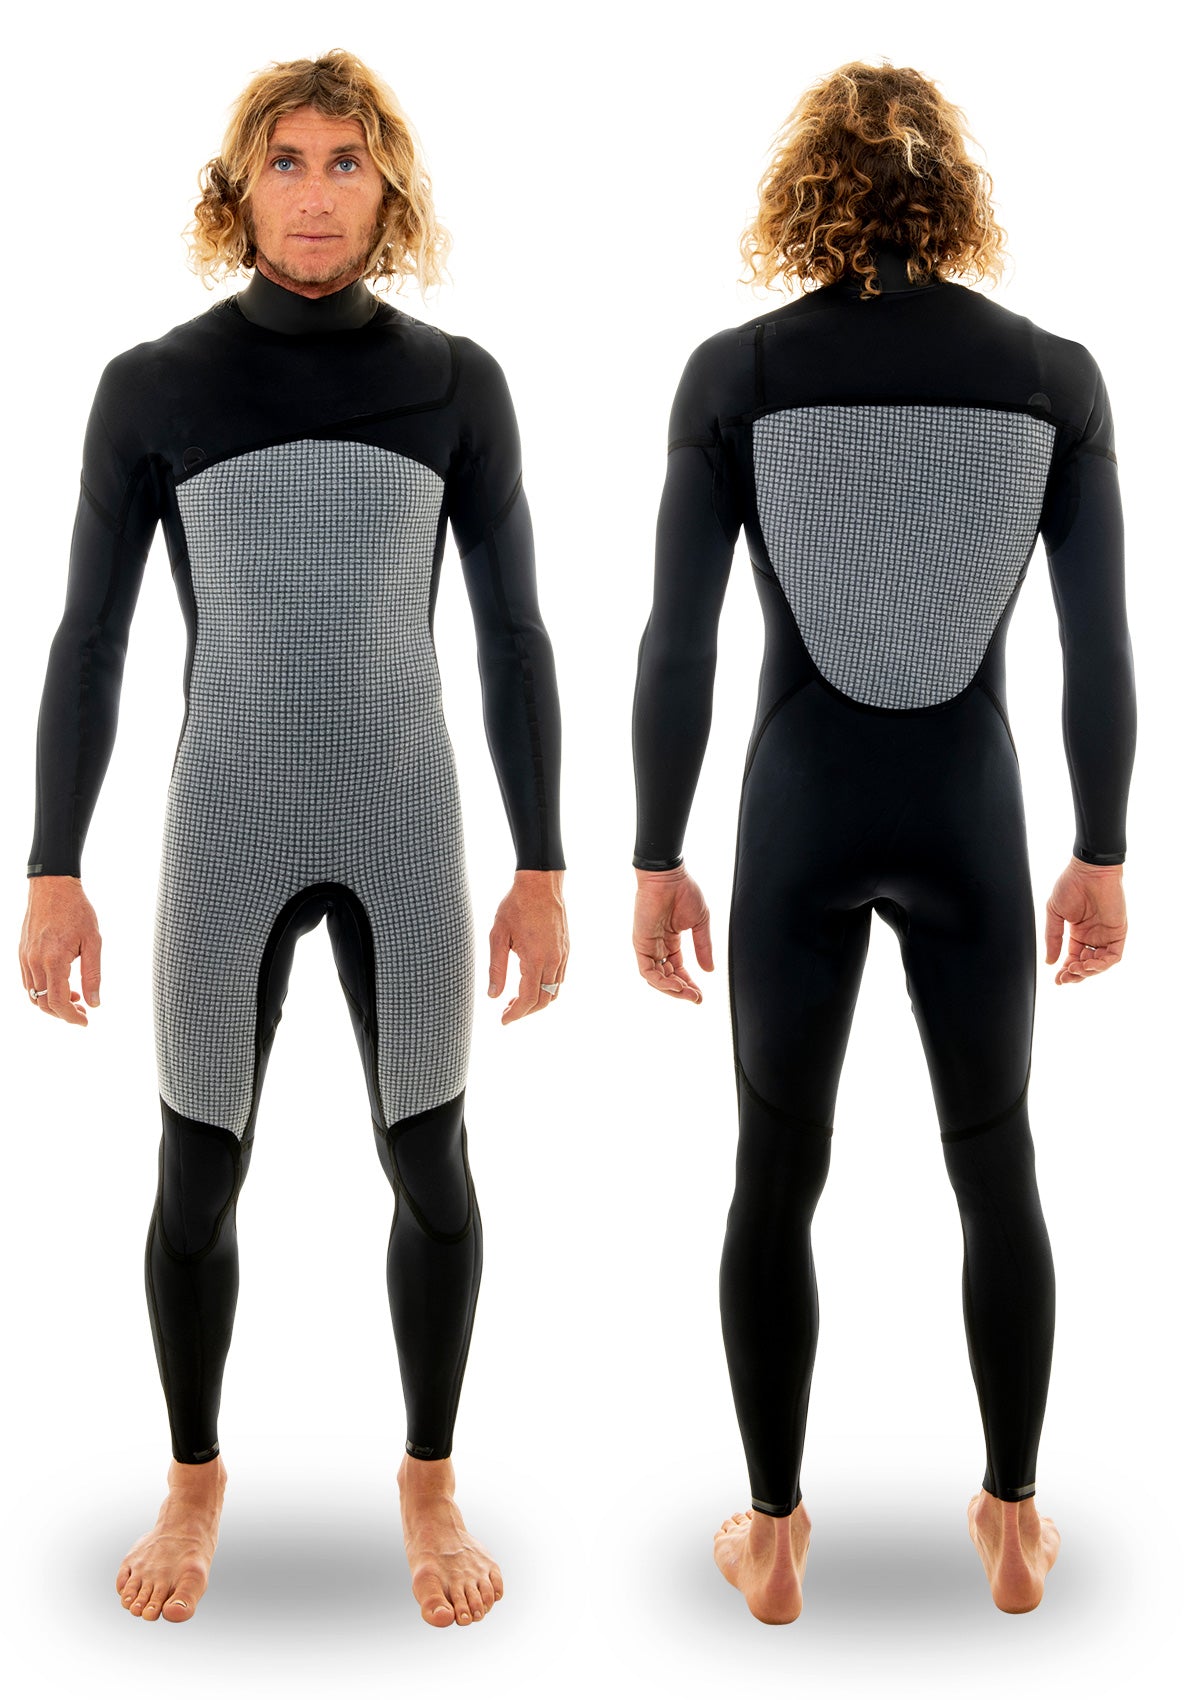 needessentials 3/2 thermal chest zip wetsuit surfing wetsuit winter black 